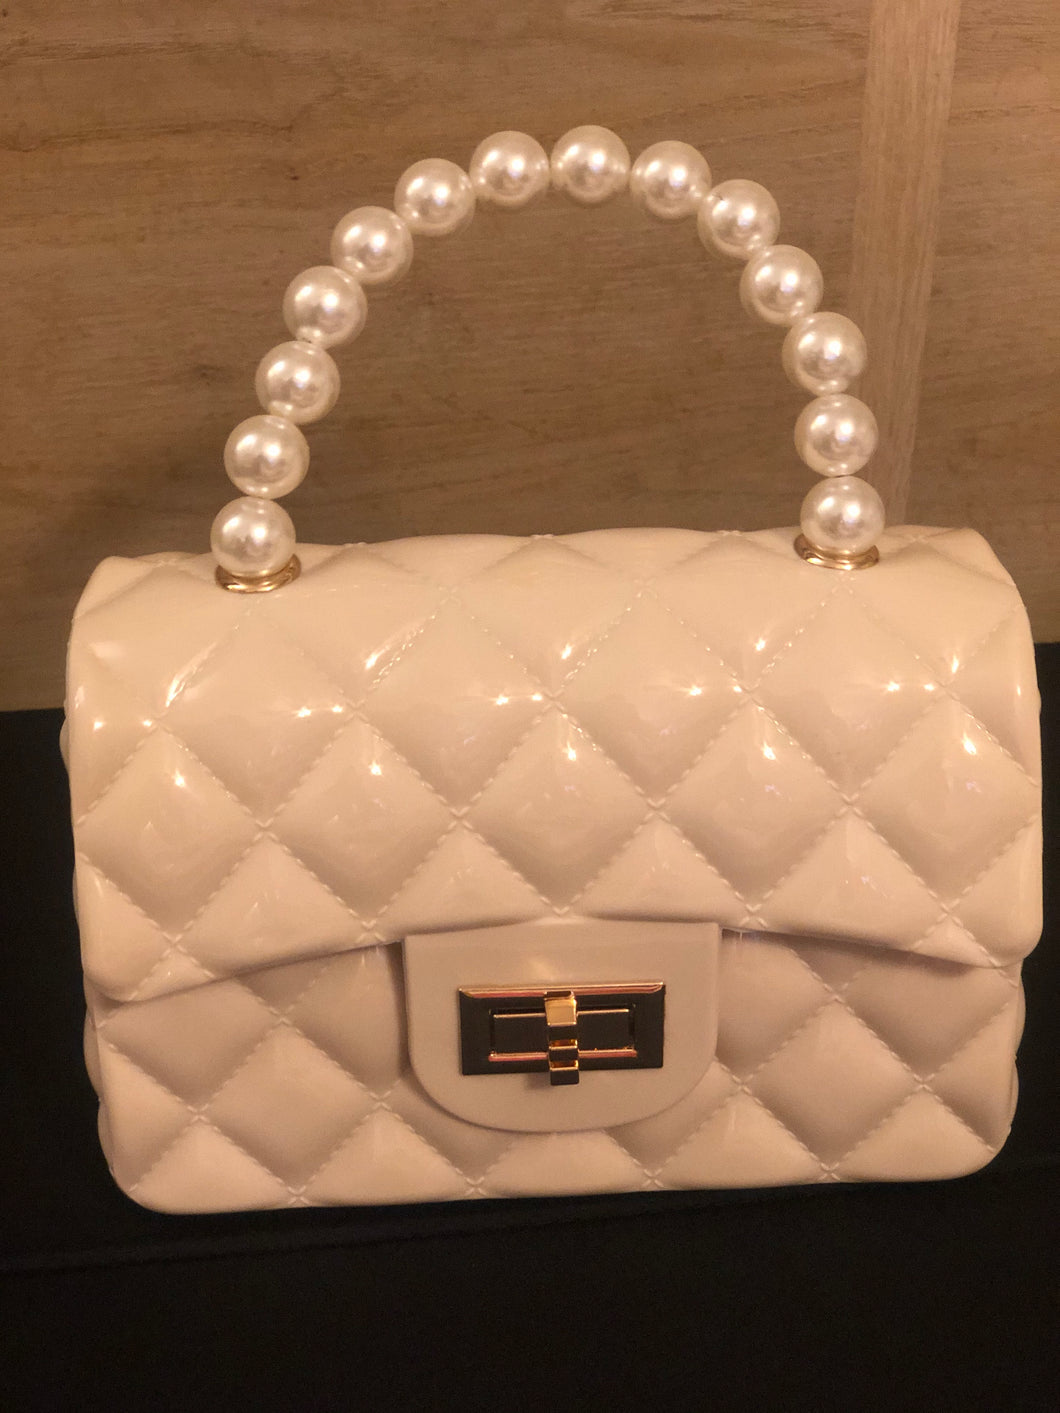 Pearl Jelly purse.